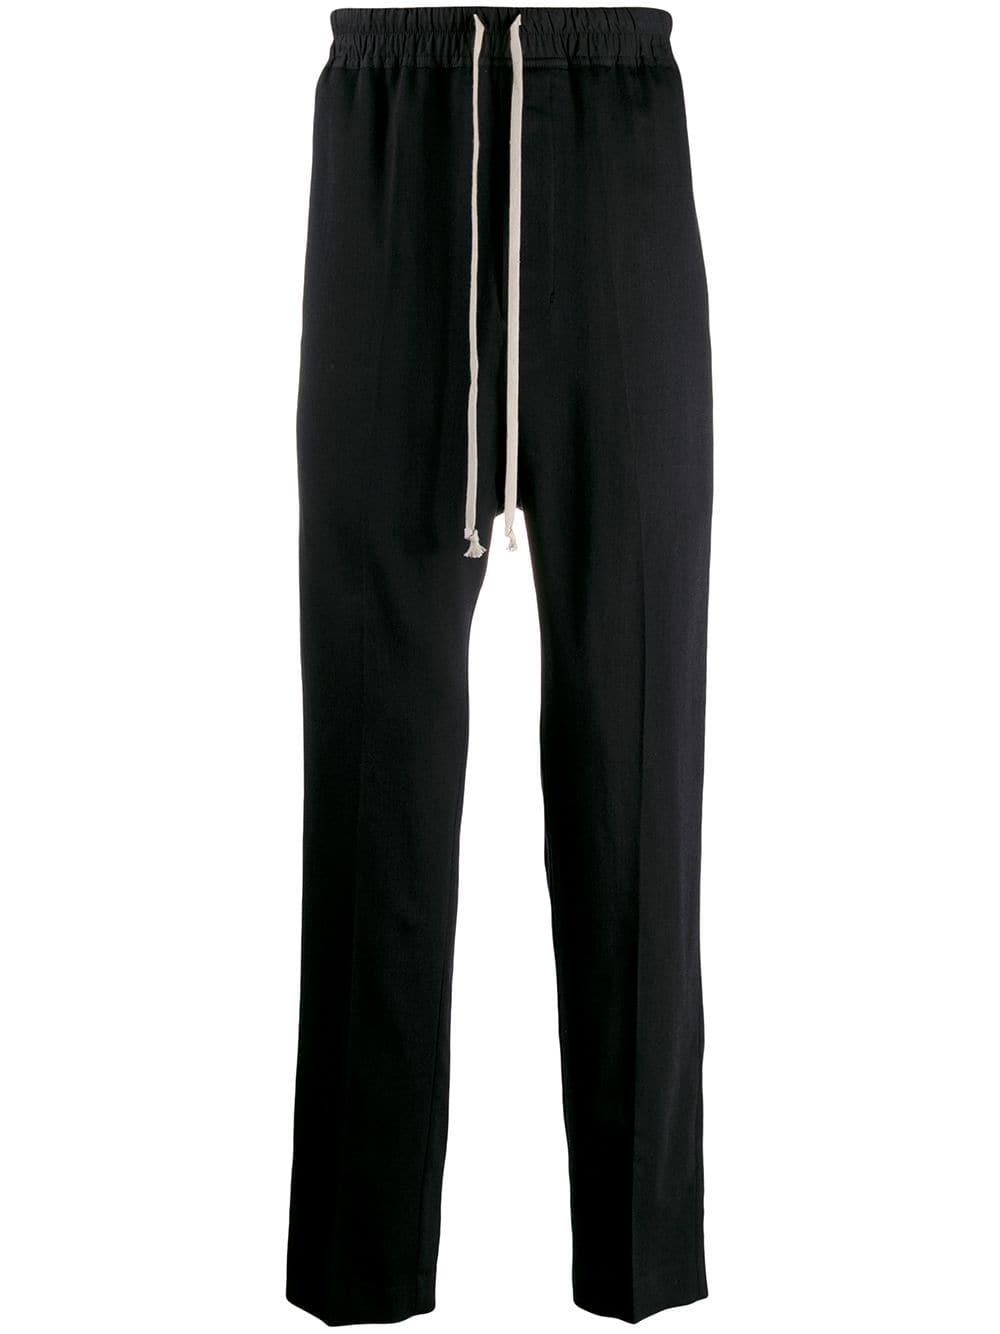 Rick Owens Wool Drawstring Waist Trousers in Black for Men - Lyst